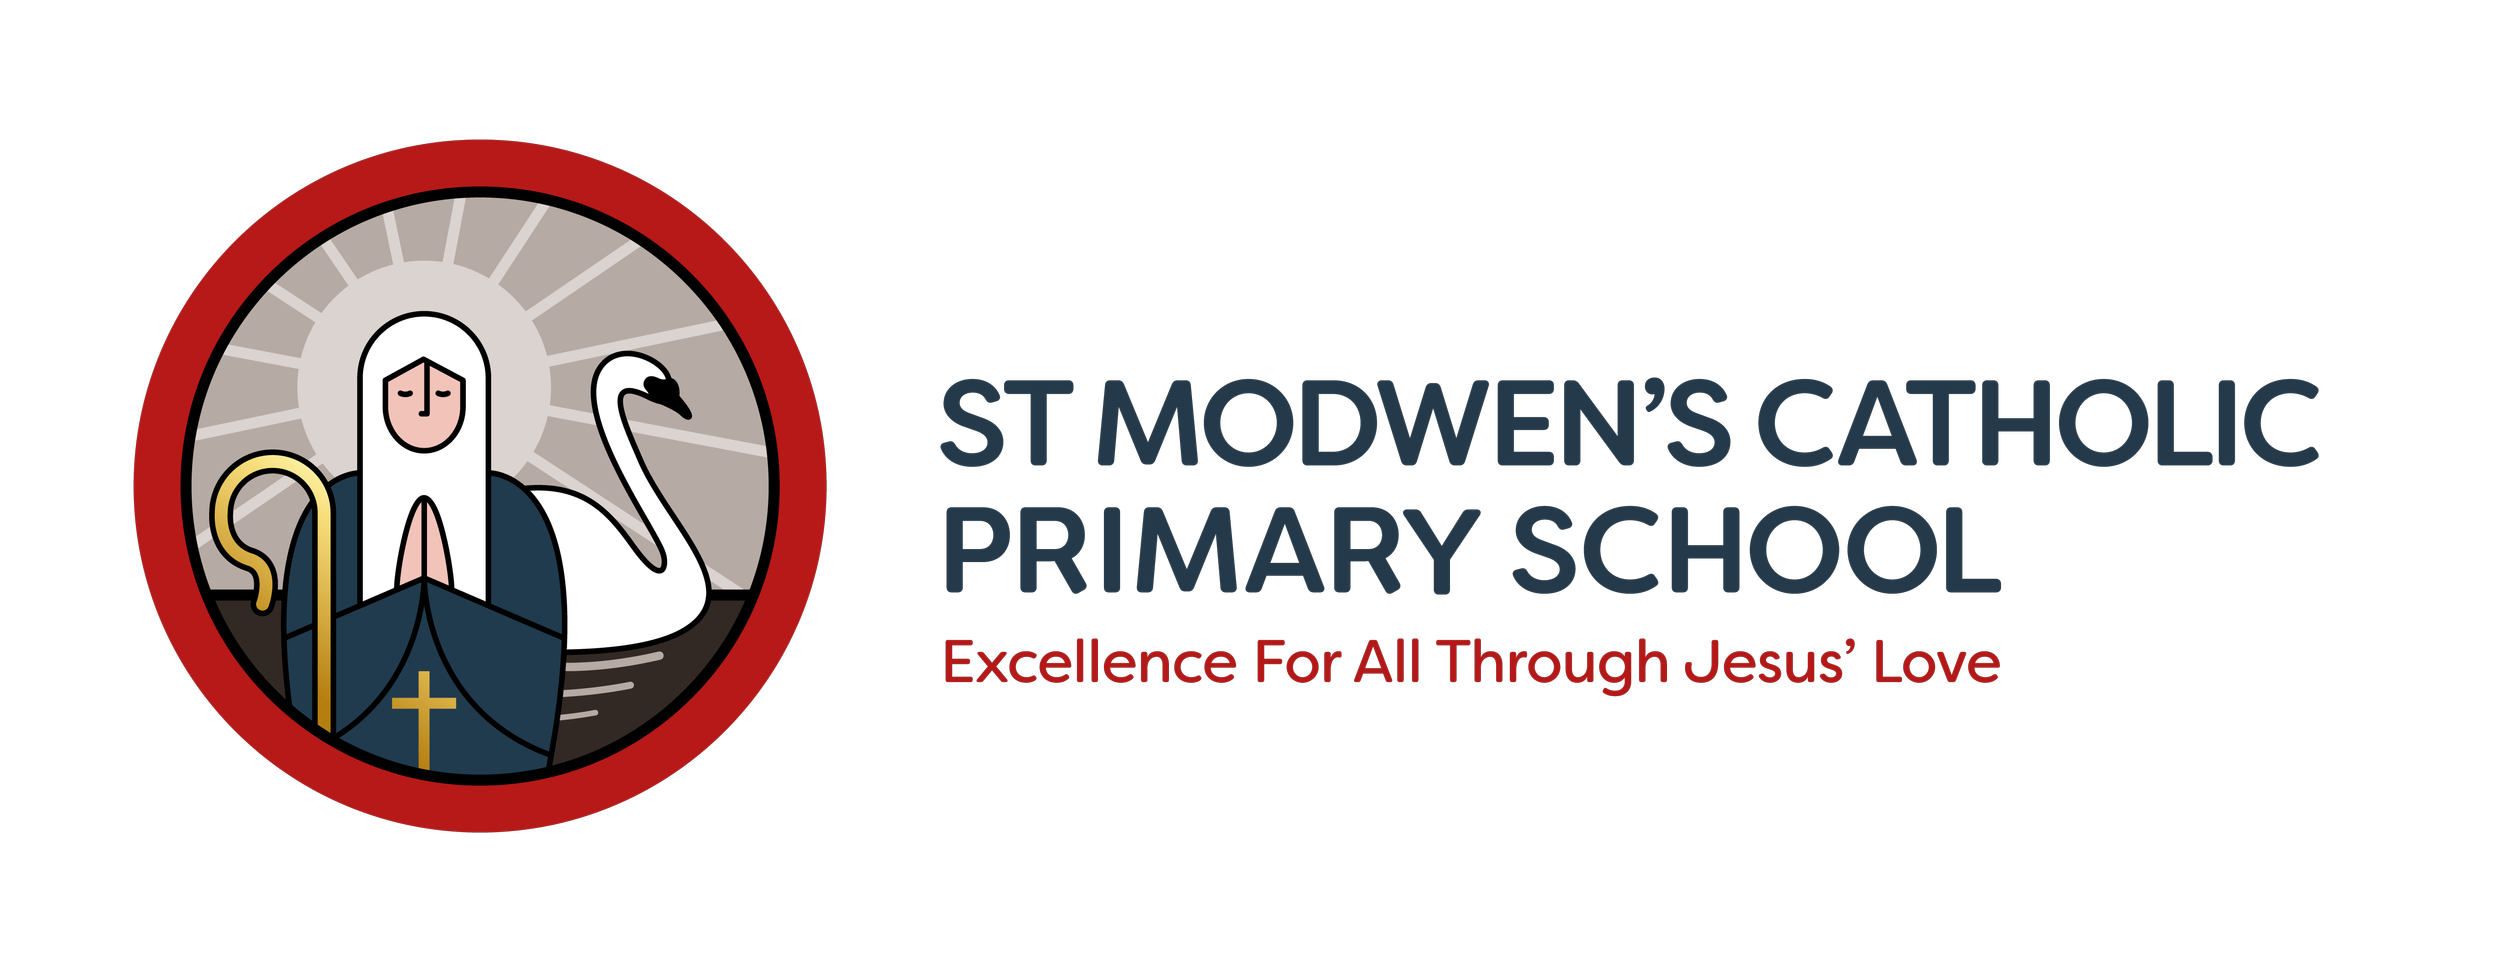 St Modwens Primary School Branding - Logo